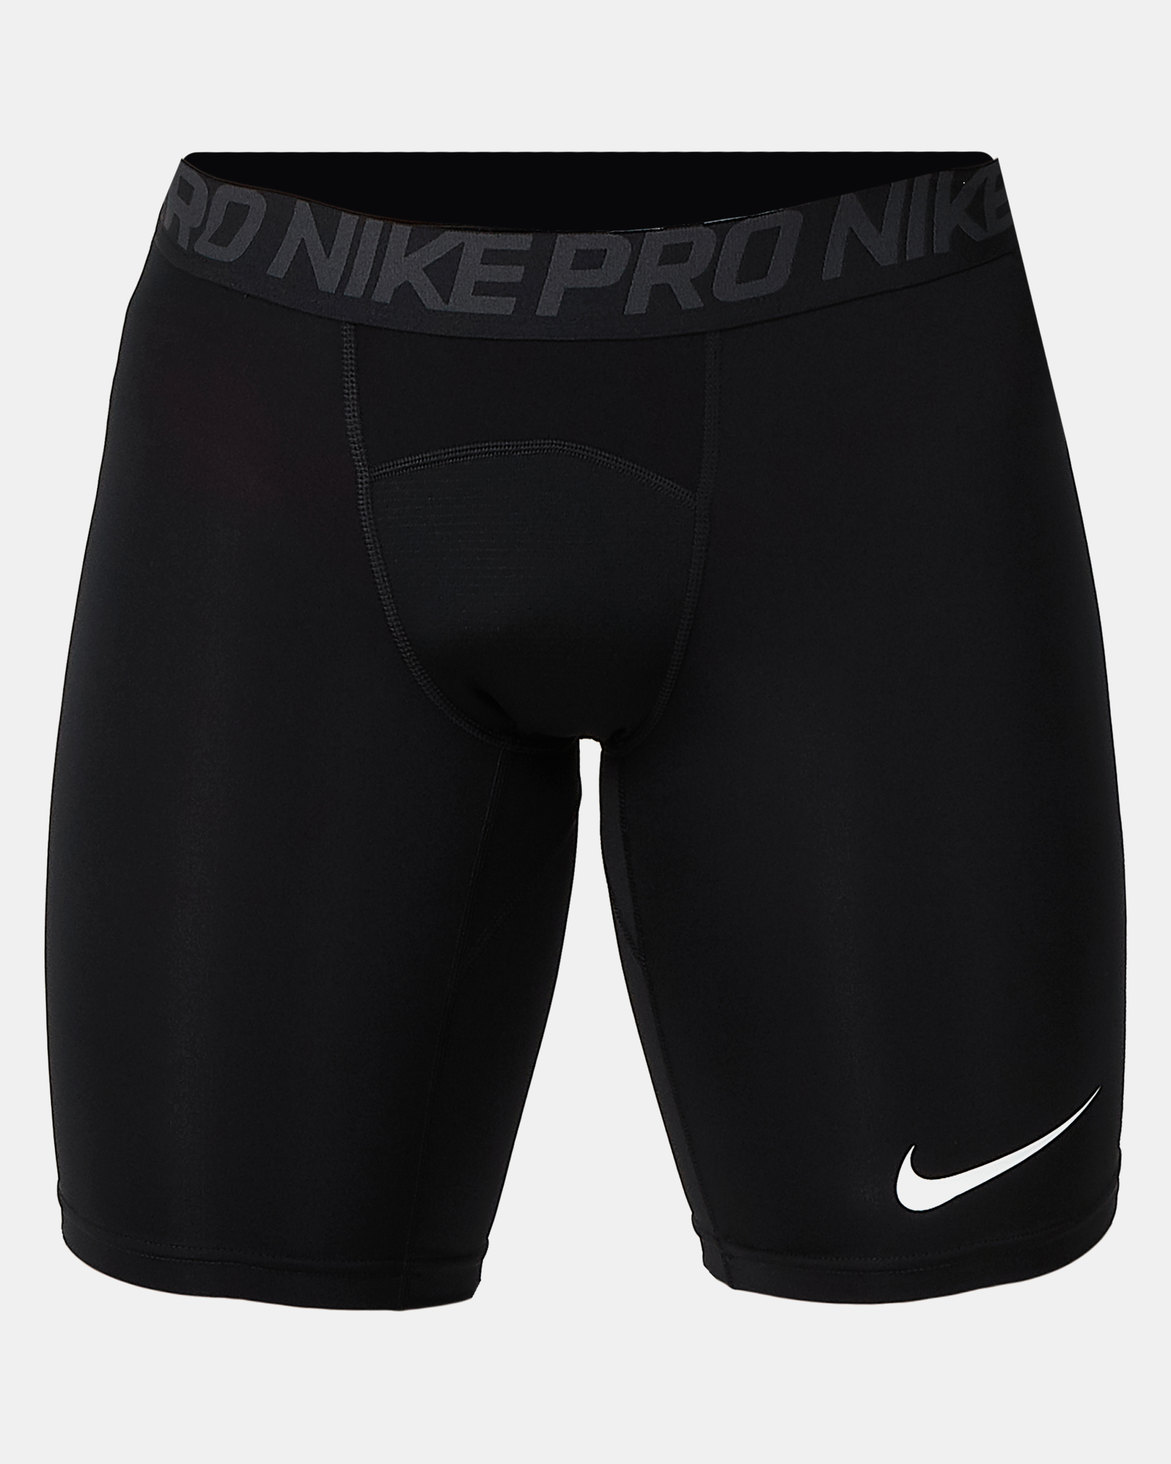 Nike Performance Pro Men's Training Shorts Black | Zando